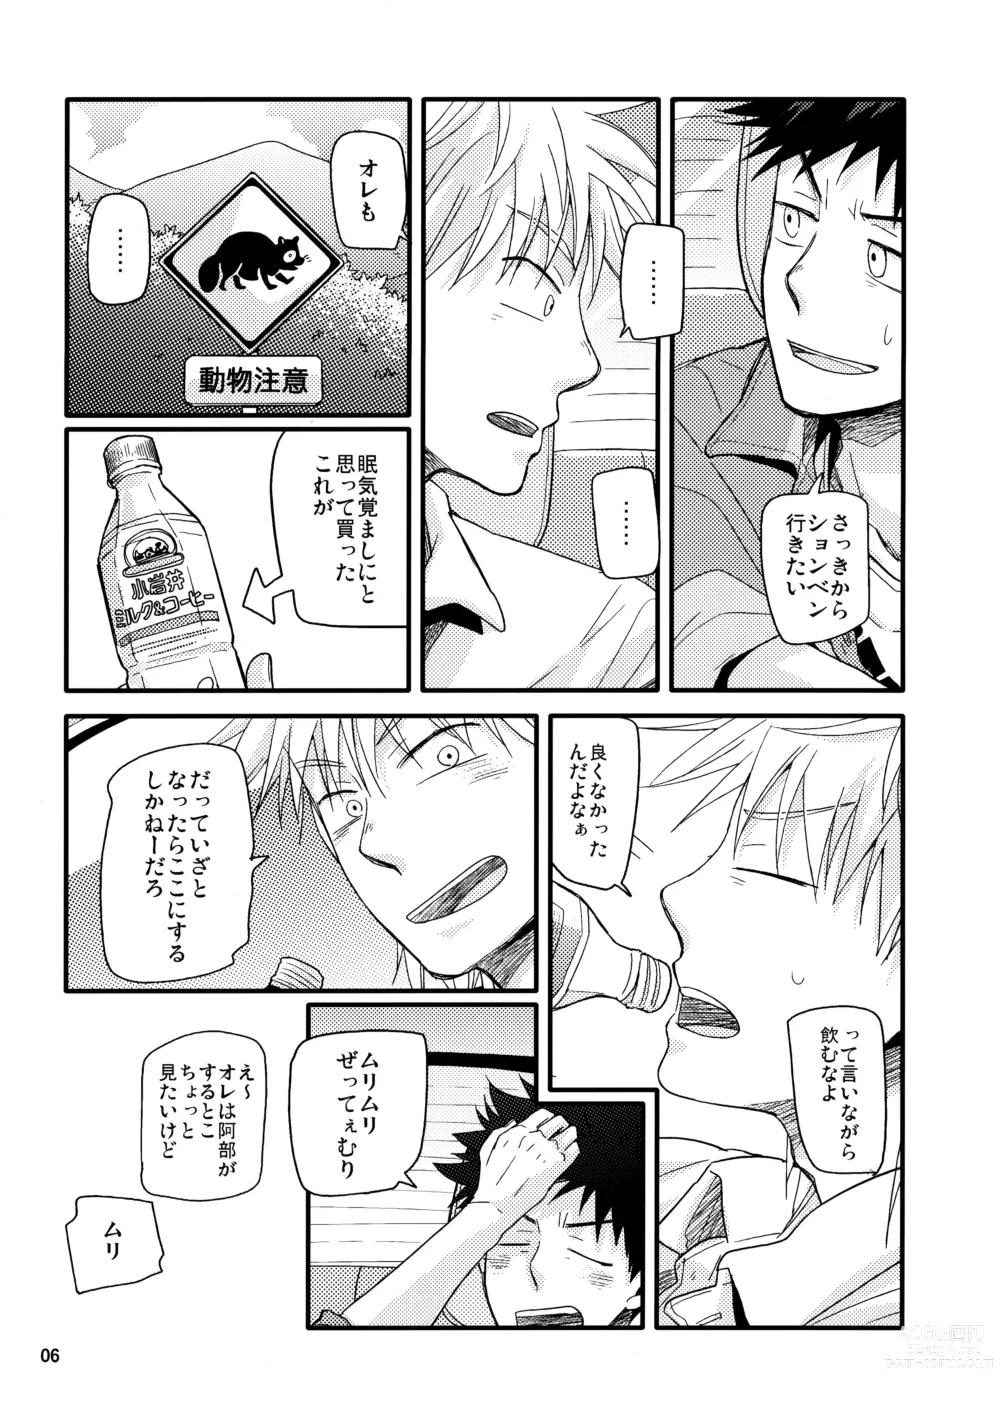 Page 5 of doujinshi Kaki